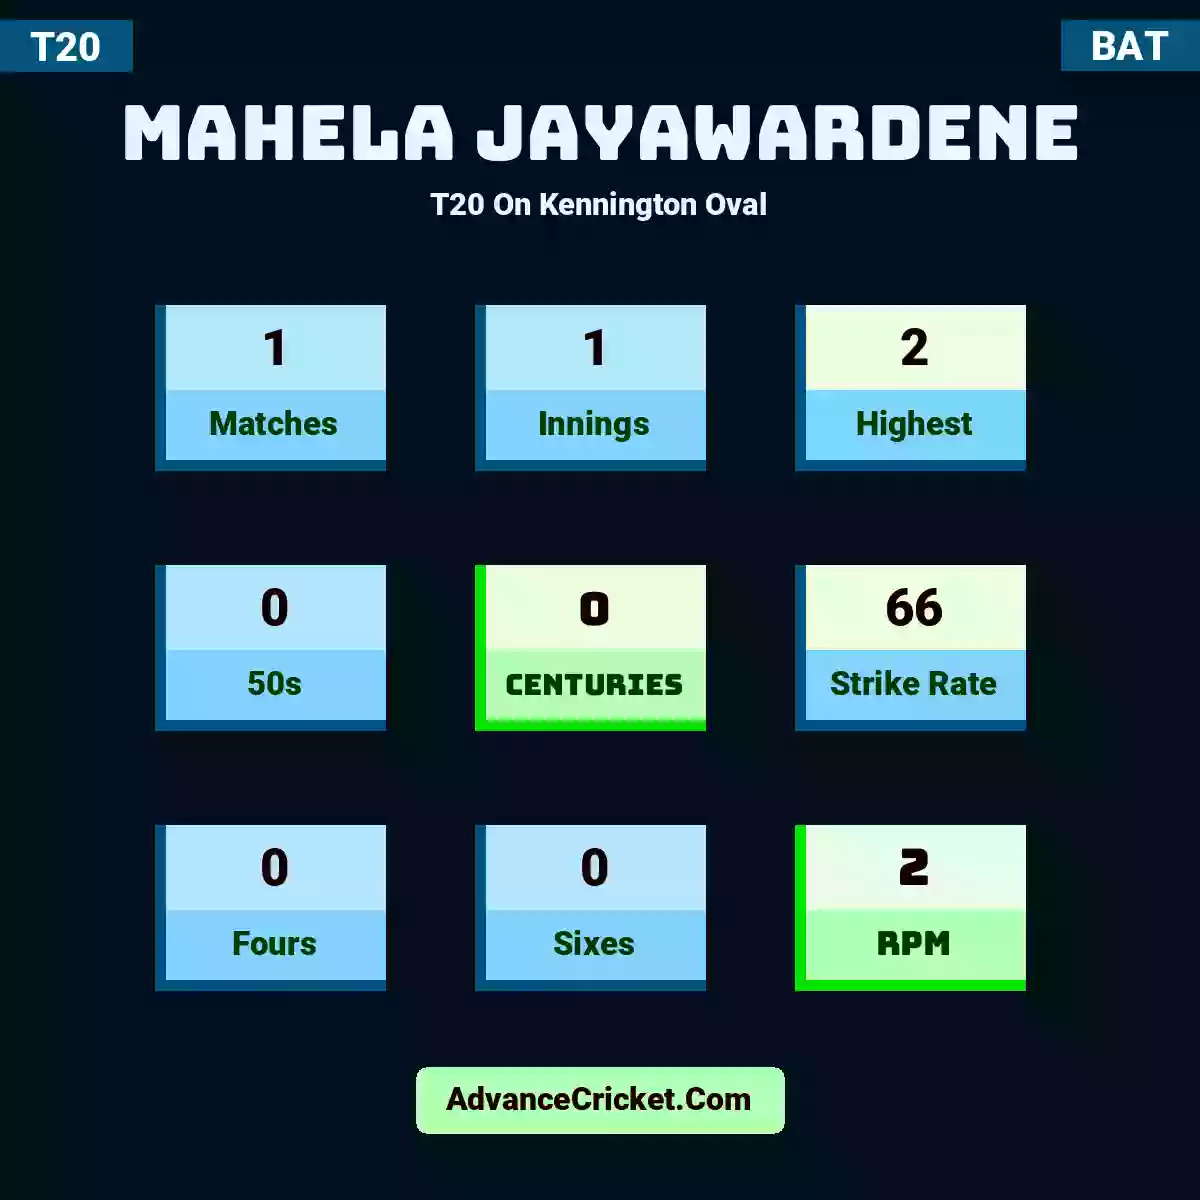 Mahela Jayawardene T20  On Kennington Oval, Mahela Jayawardene played 1 matches, scored 2 runs as highest, 0 half-centuries, and 0 centuries, with a strike rate of 66. M.Jayawardene hit 0 fours and 0 sixes, with an RPM of 2.